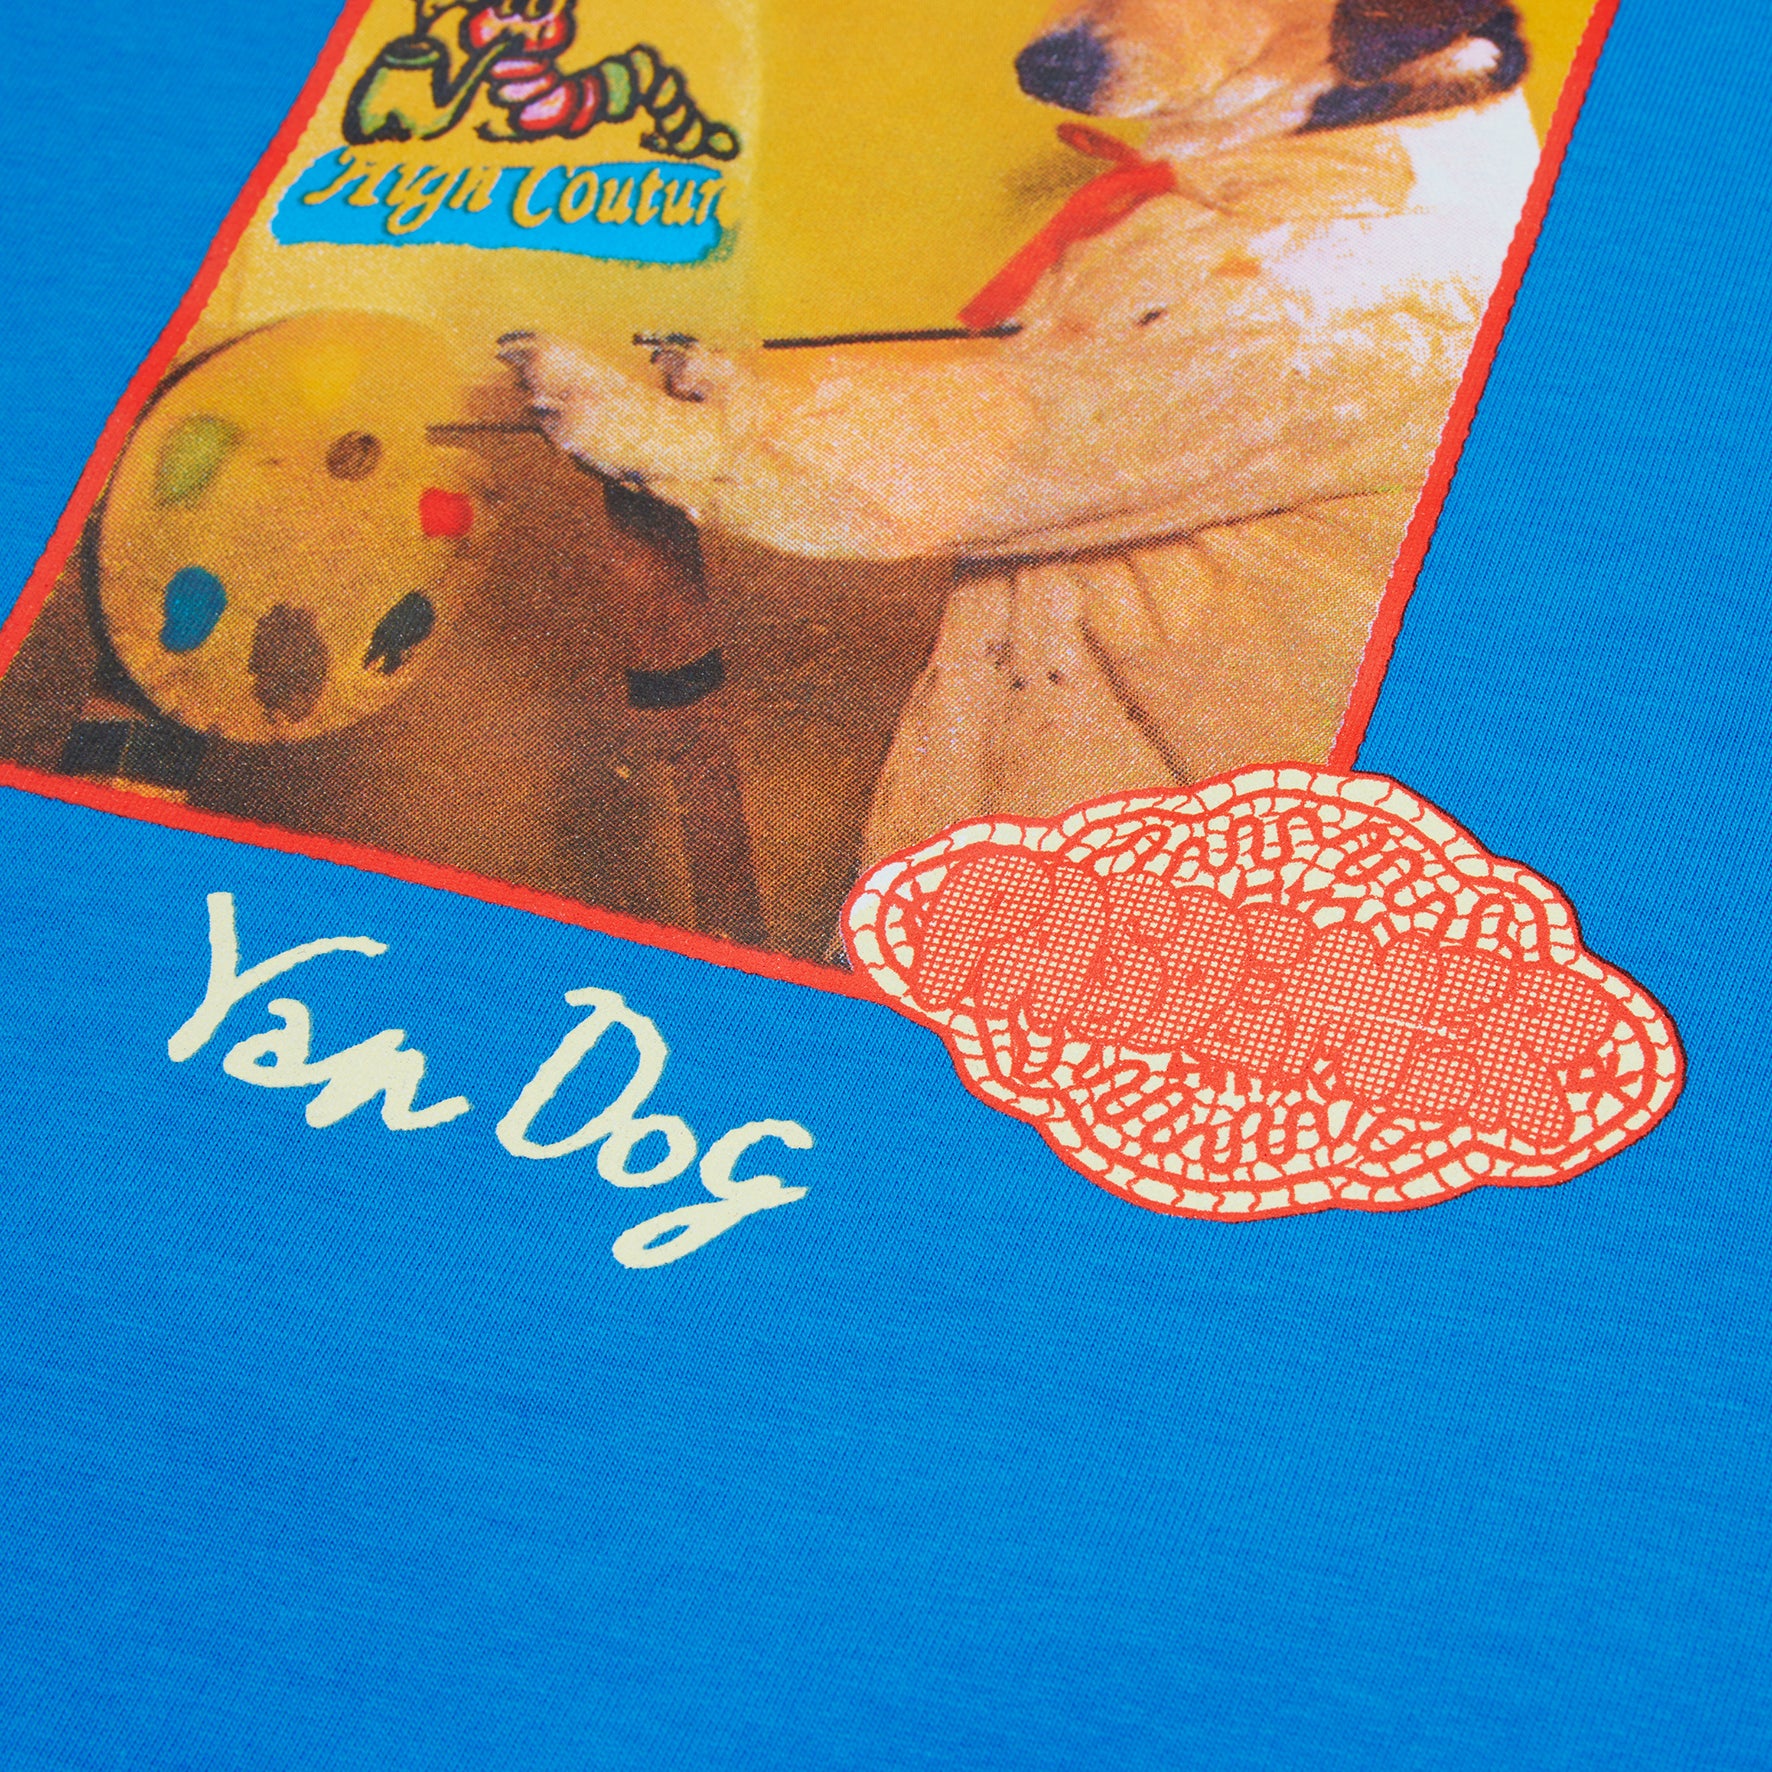 Van Dog T-Shirt